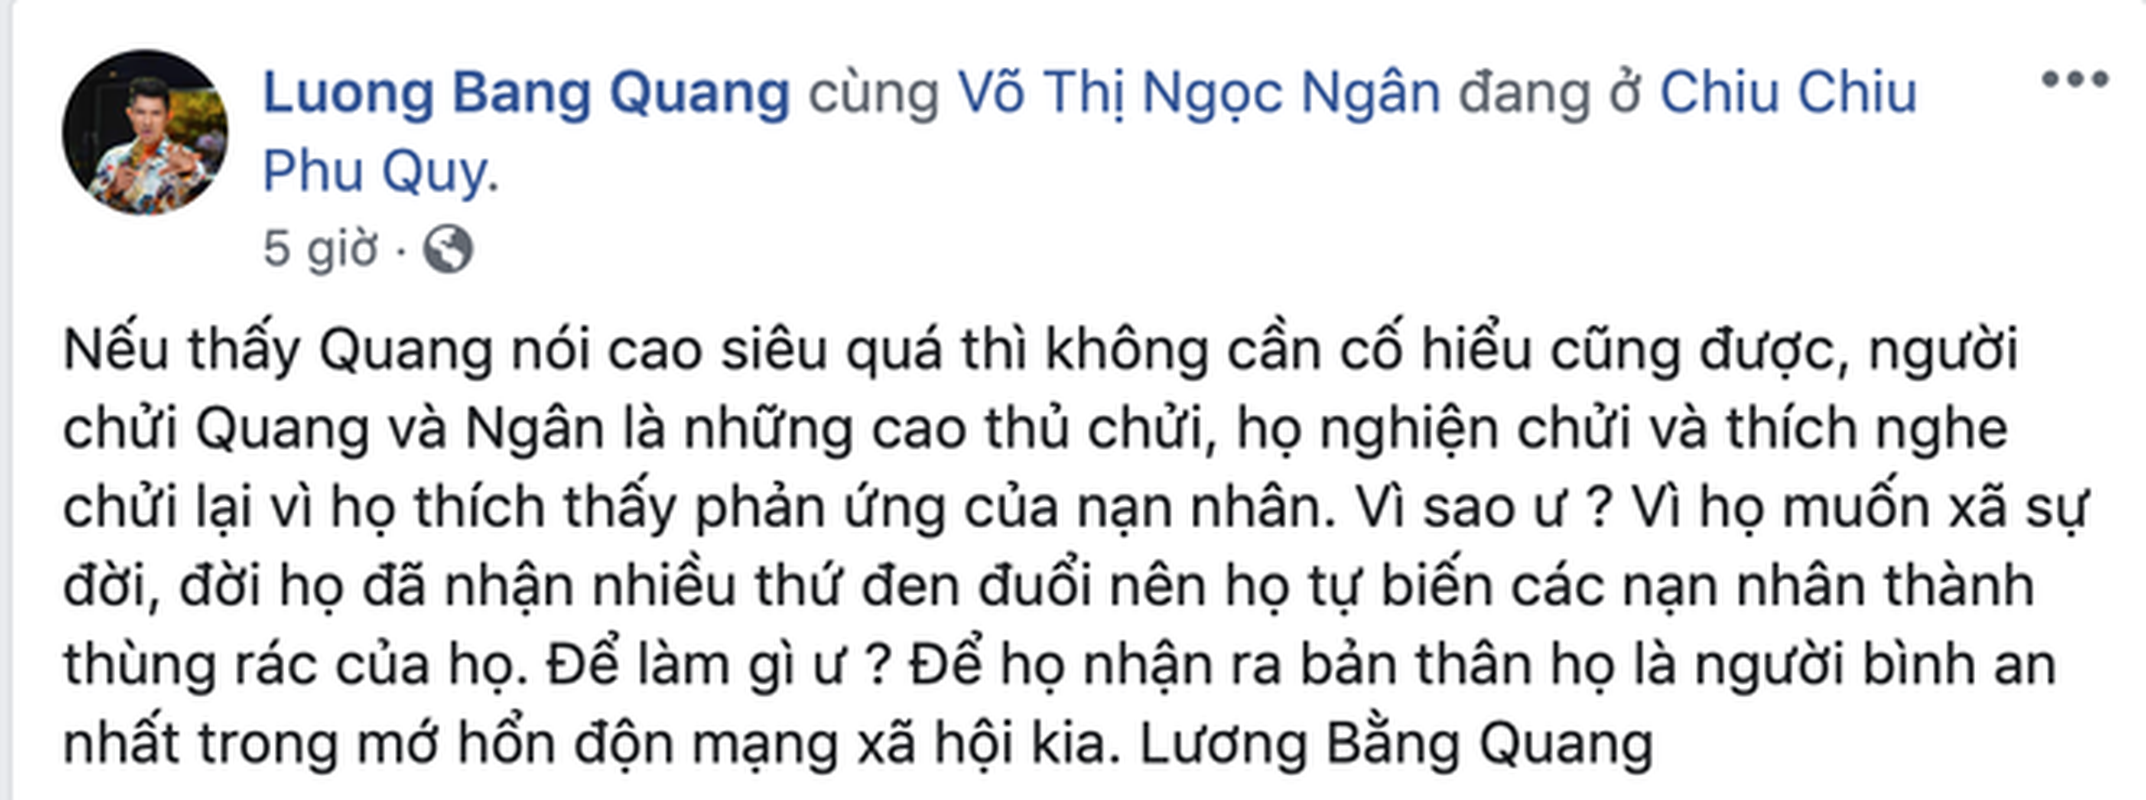 Benh Ngan 98, Luong Bang Quang tien the khoe “thanh qua” nho ban gai